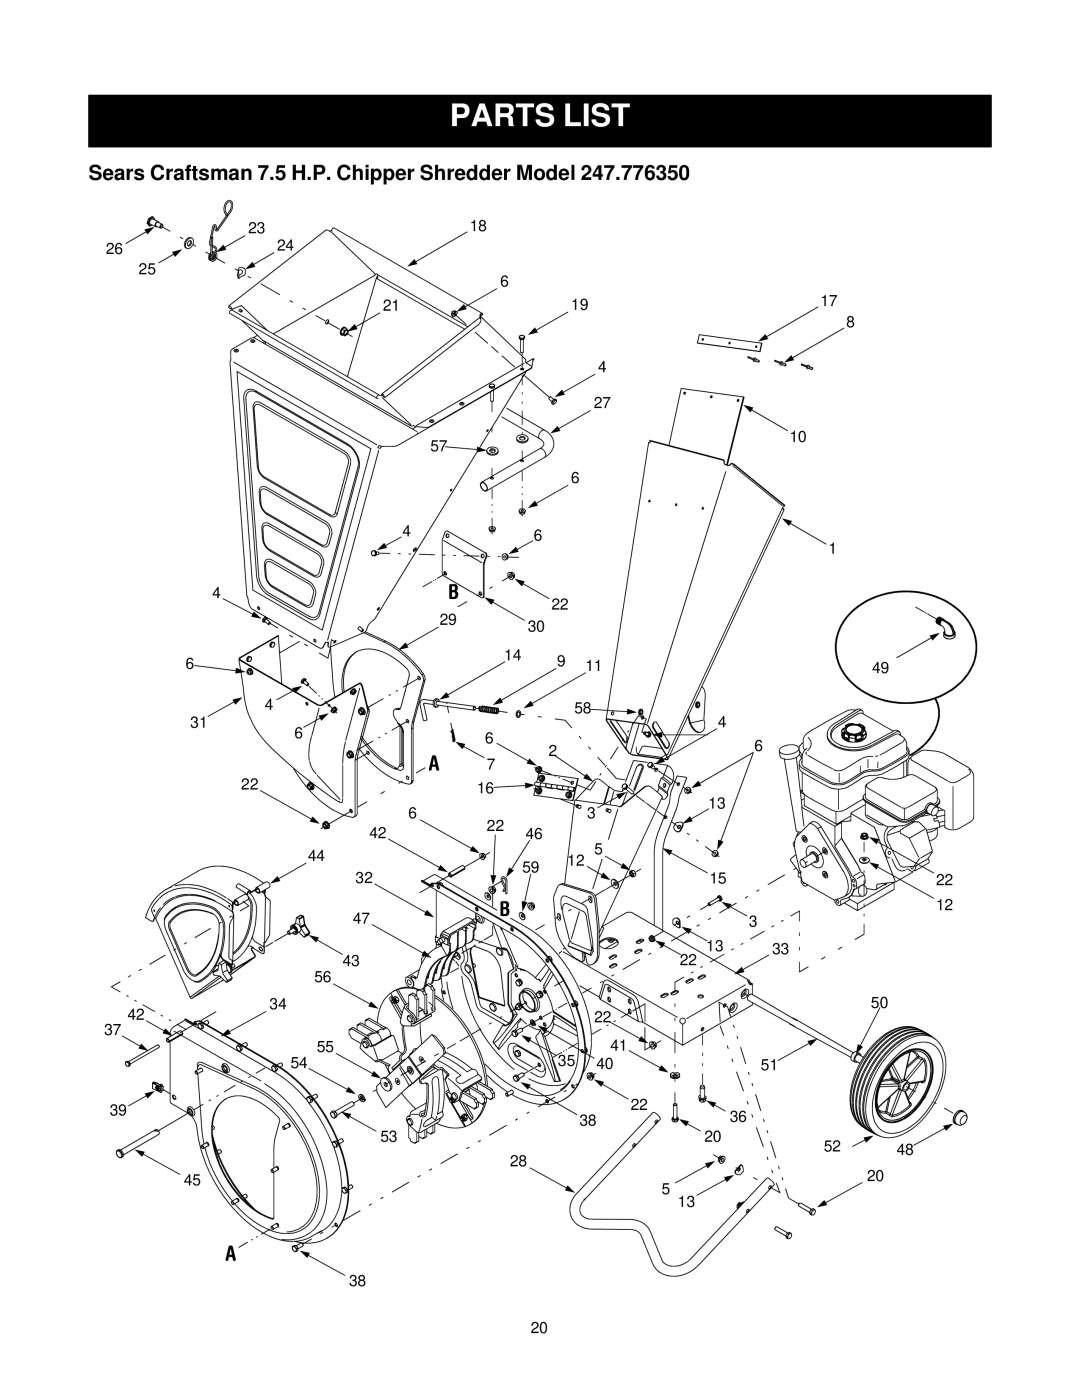 Bolens 247.77635 manual Parts List, Sears Craftsman 7.5 H.P. Chipper Shredder Model 